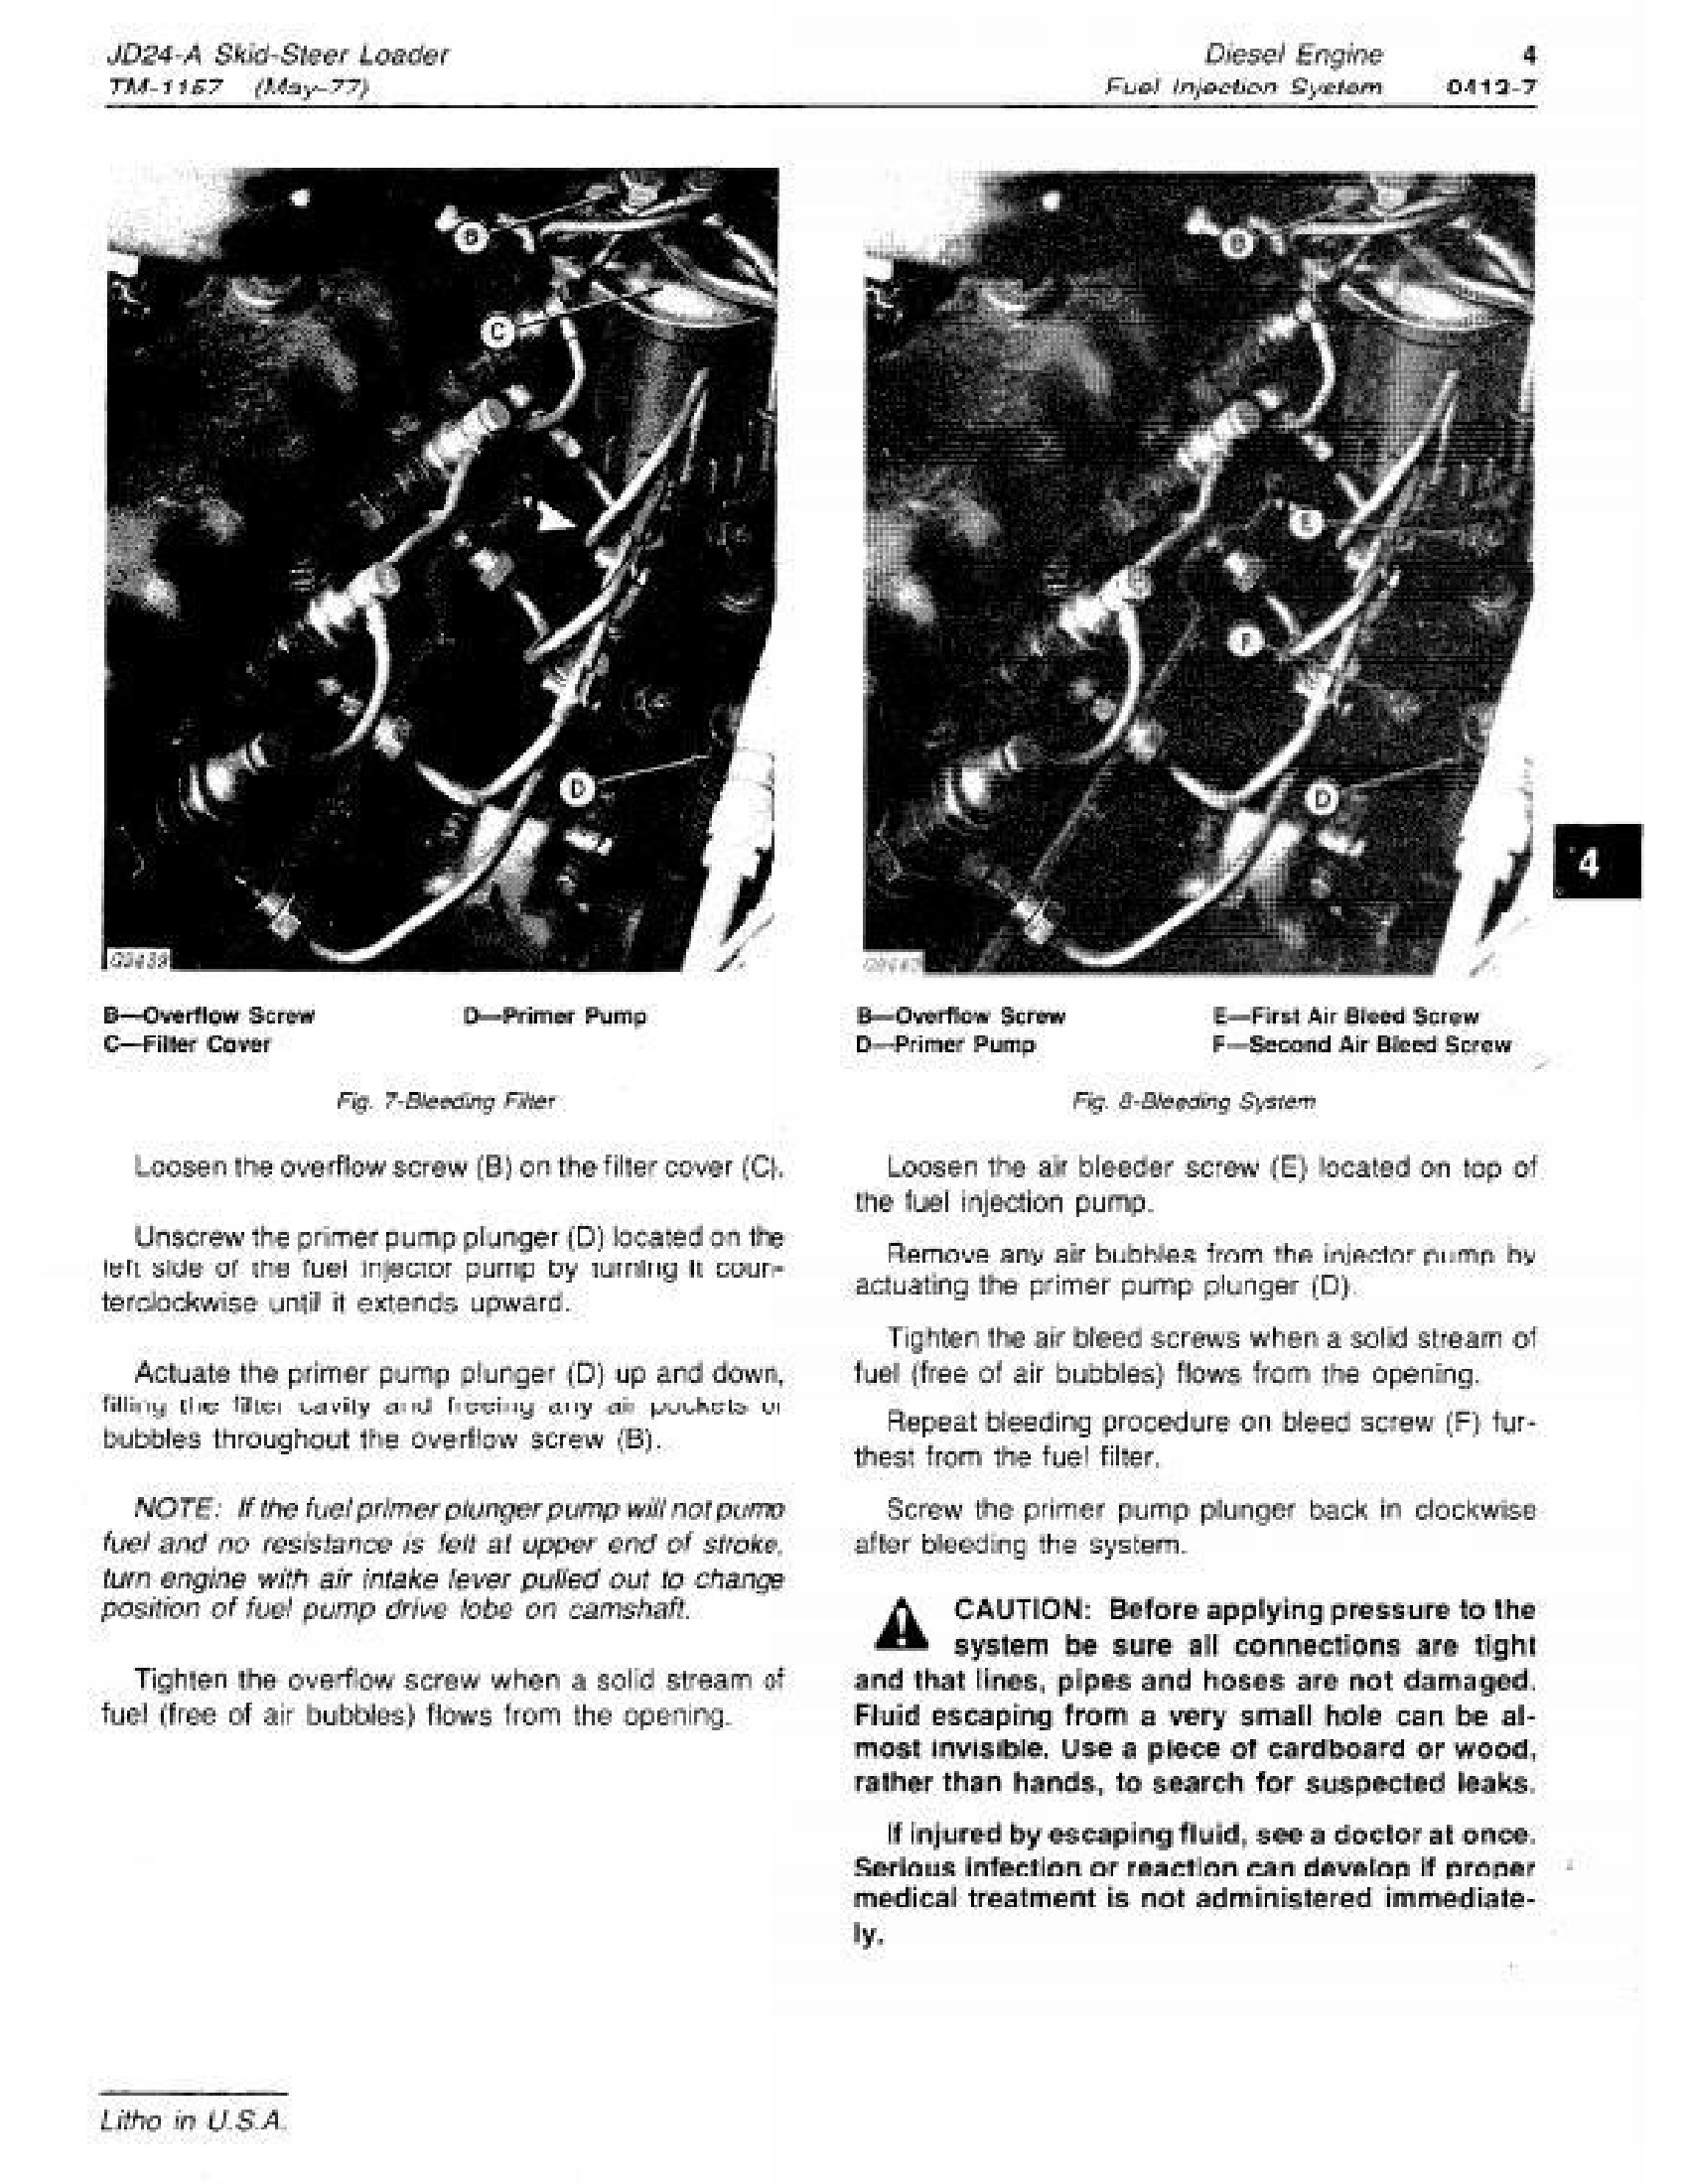 John Deere 1DW944K manual pdf